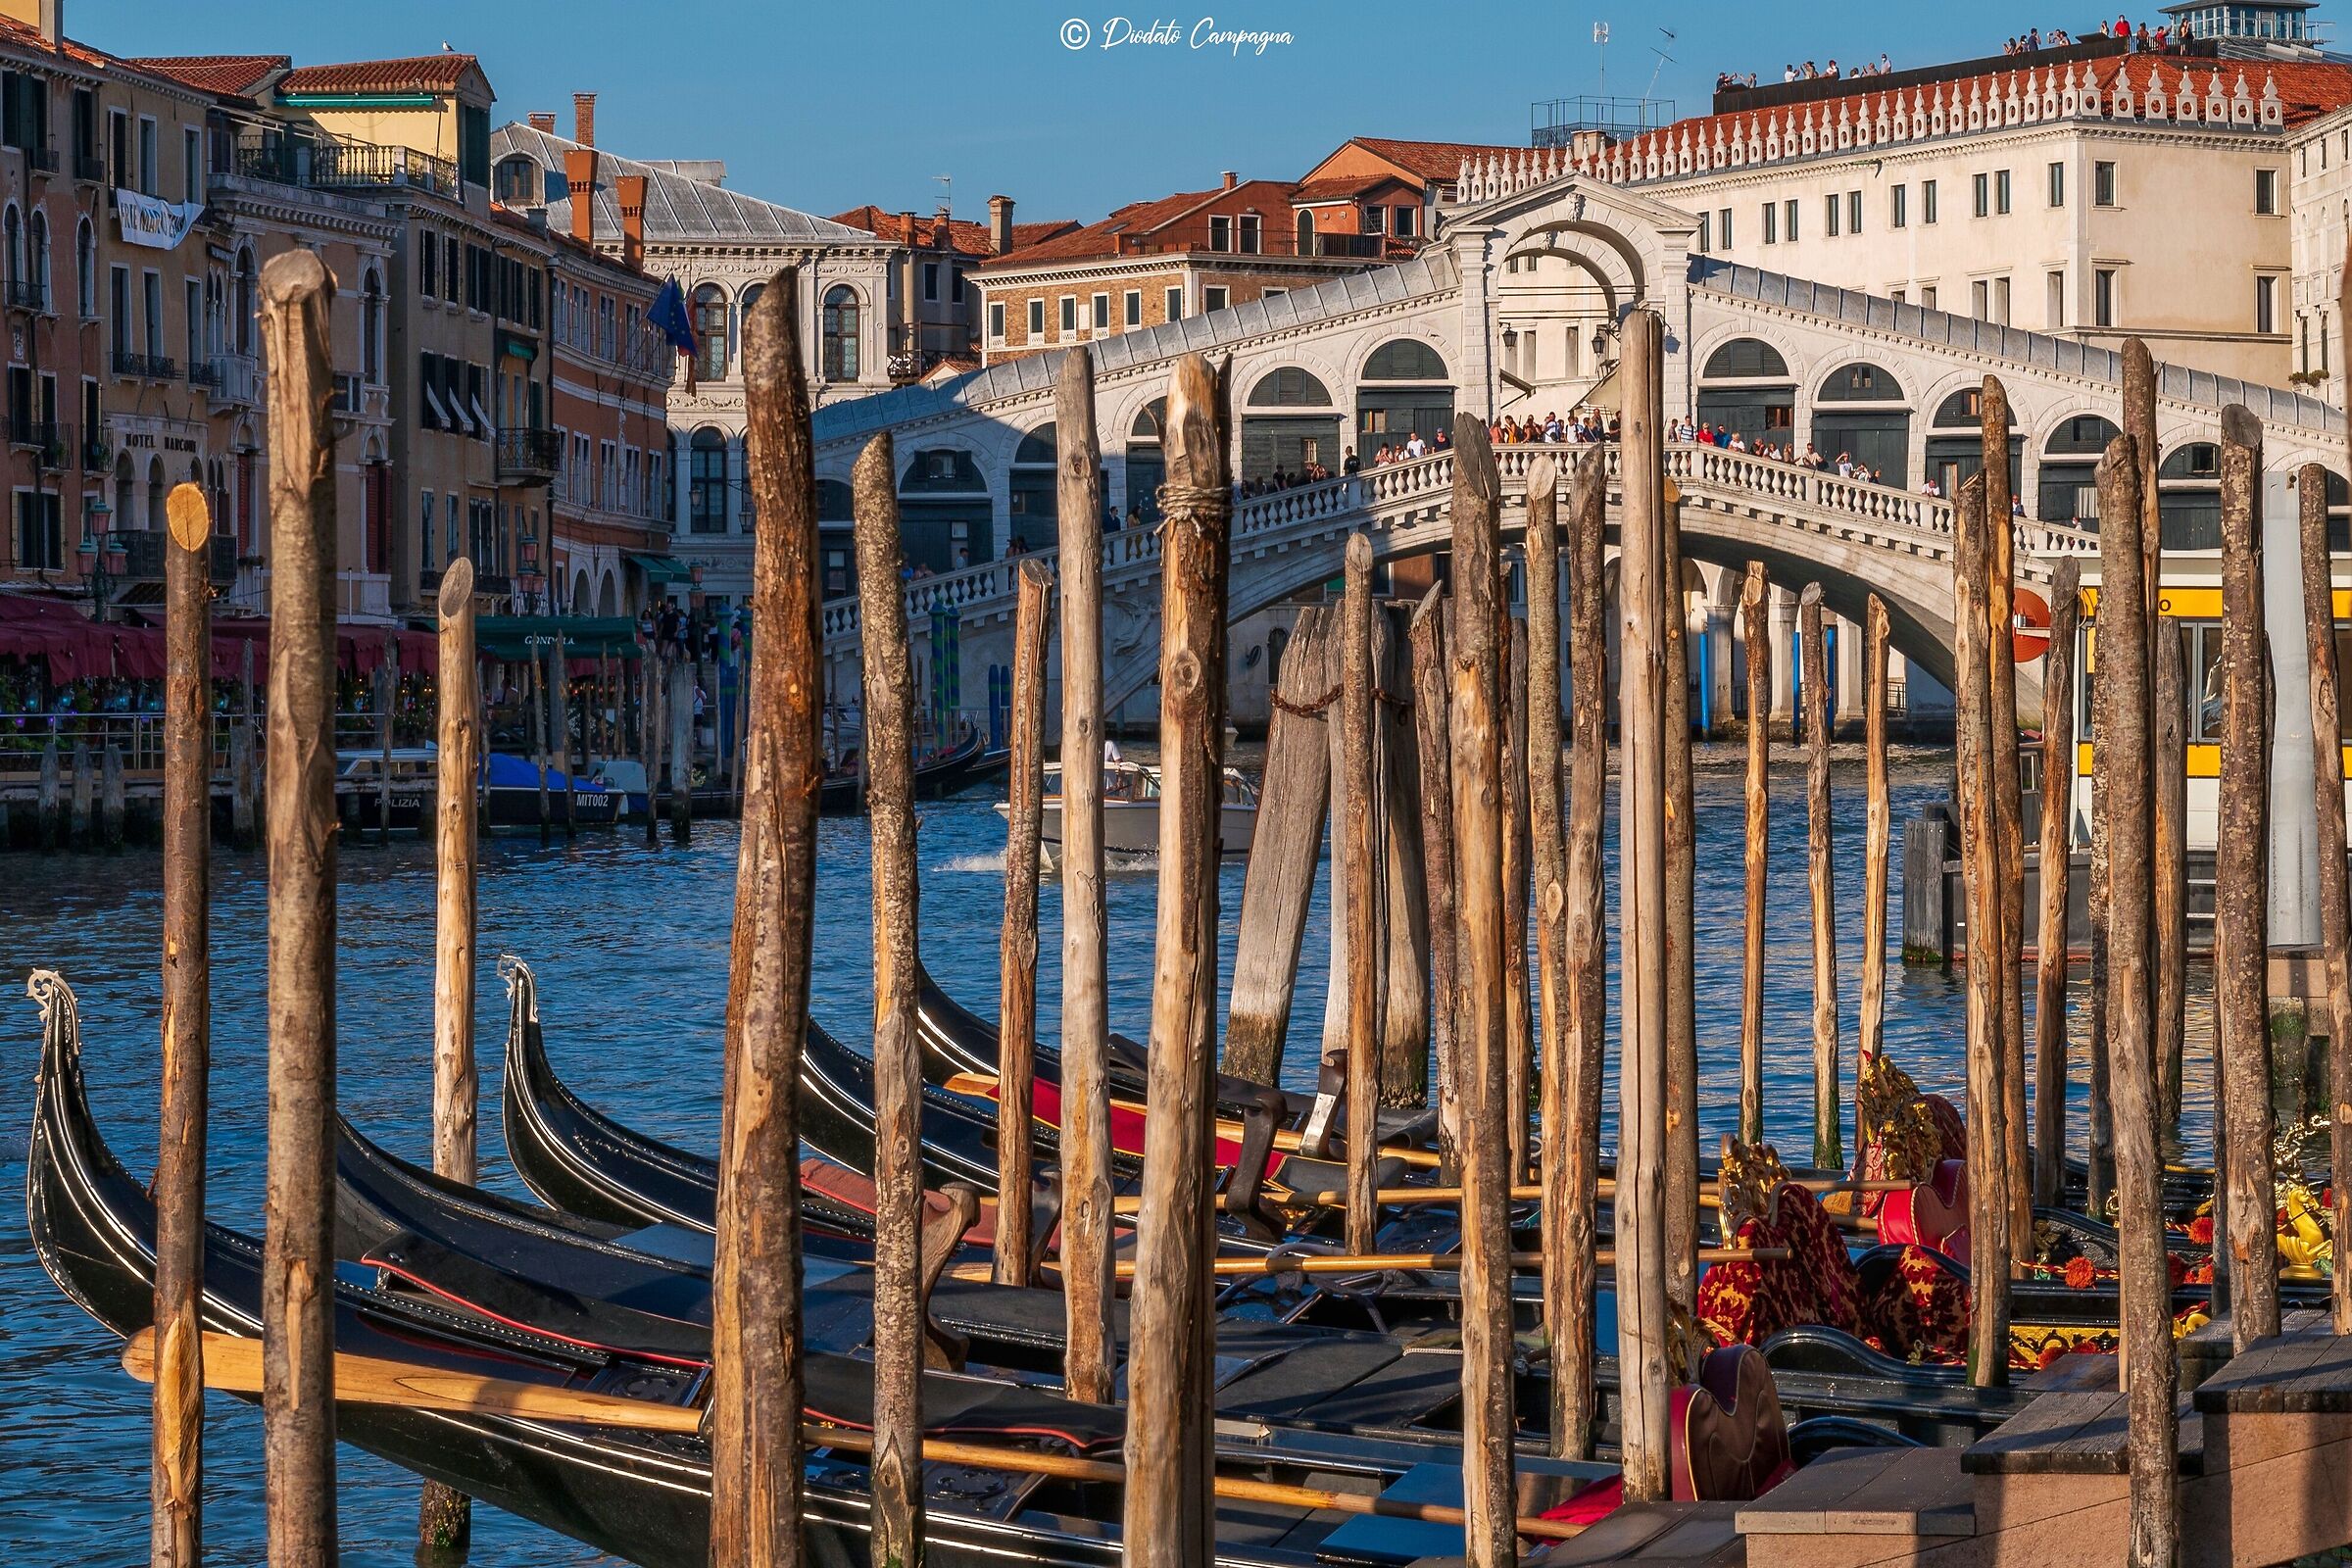 Venetian views...